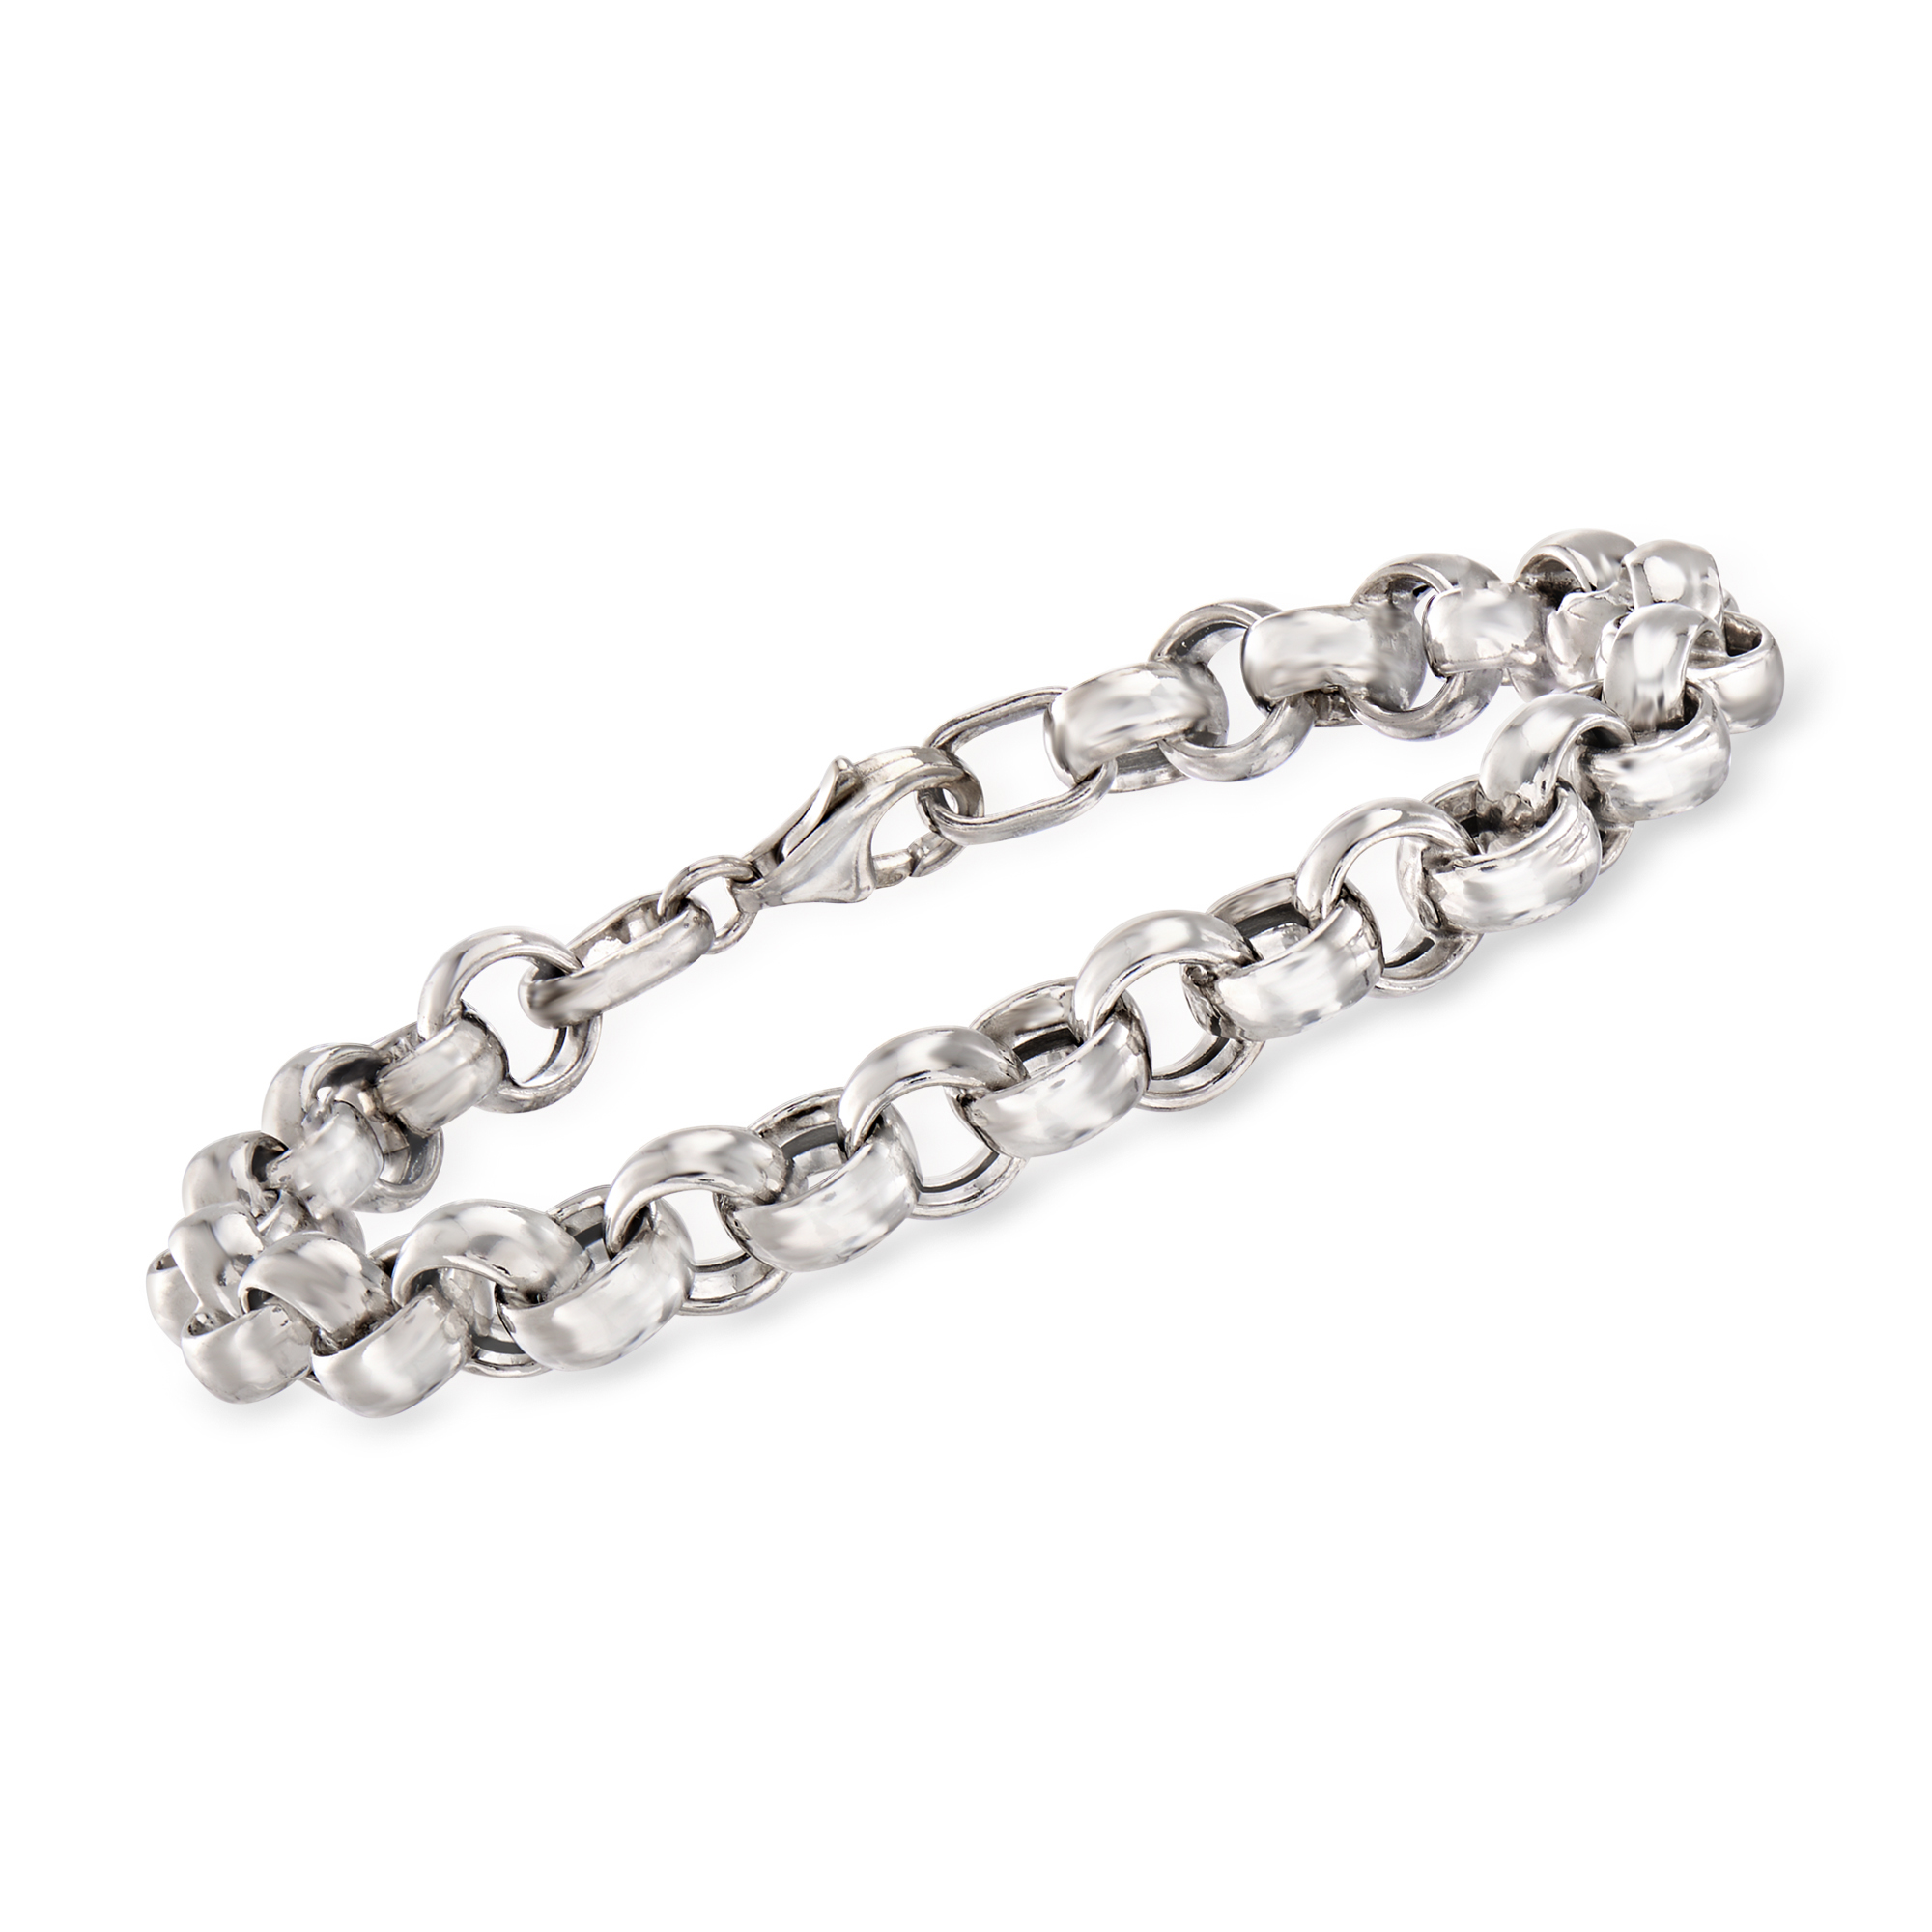 Details about   .925 Sterling Silver Rolo Link Charm Bracelet